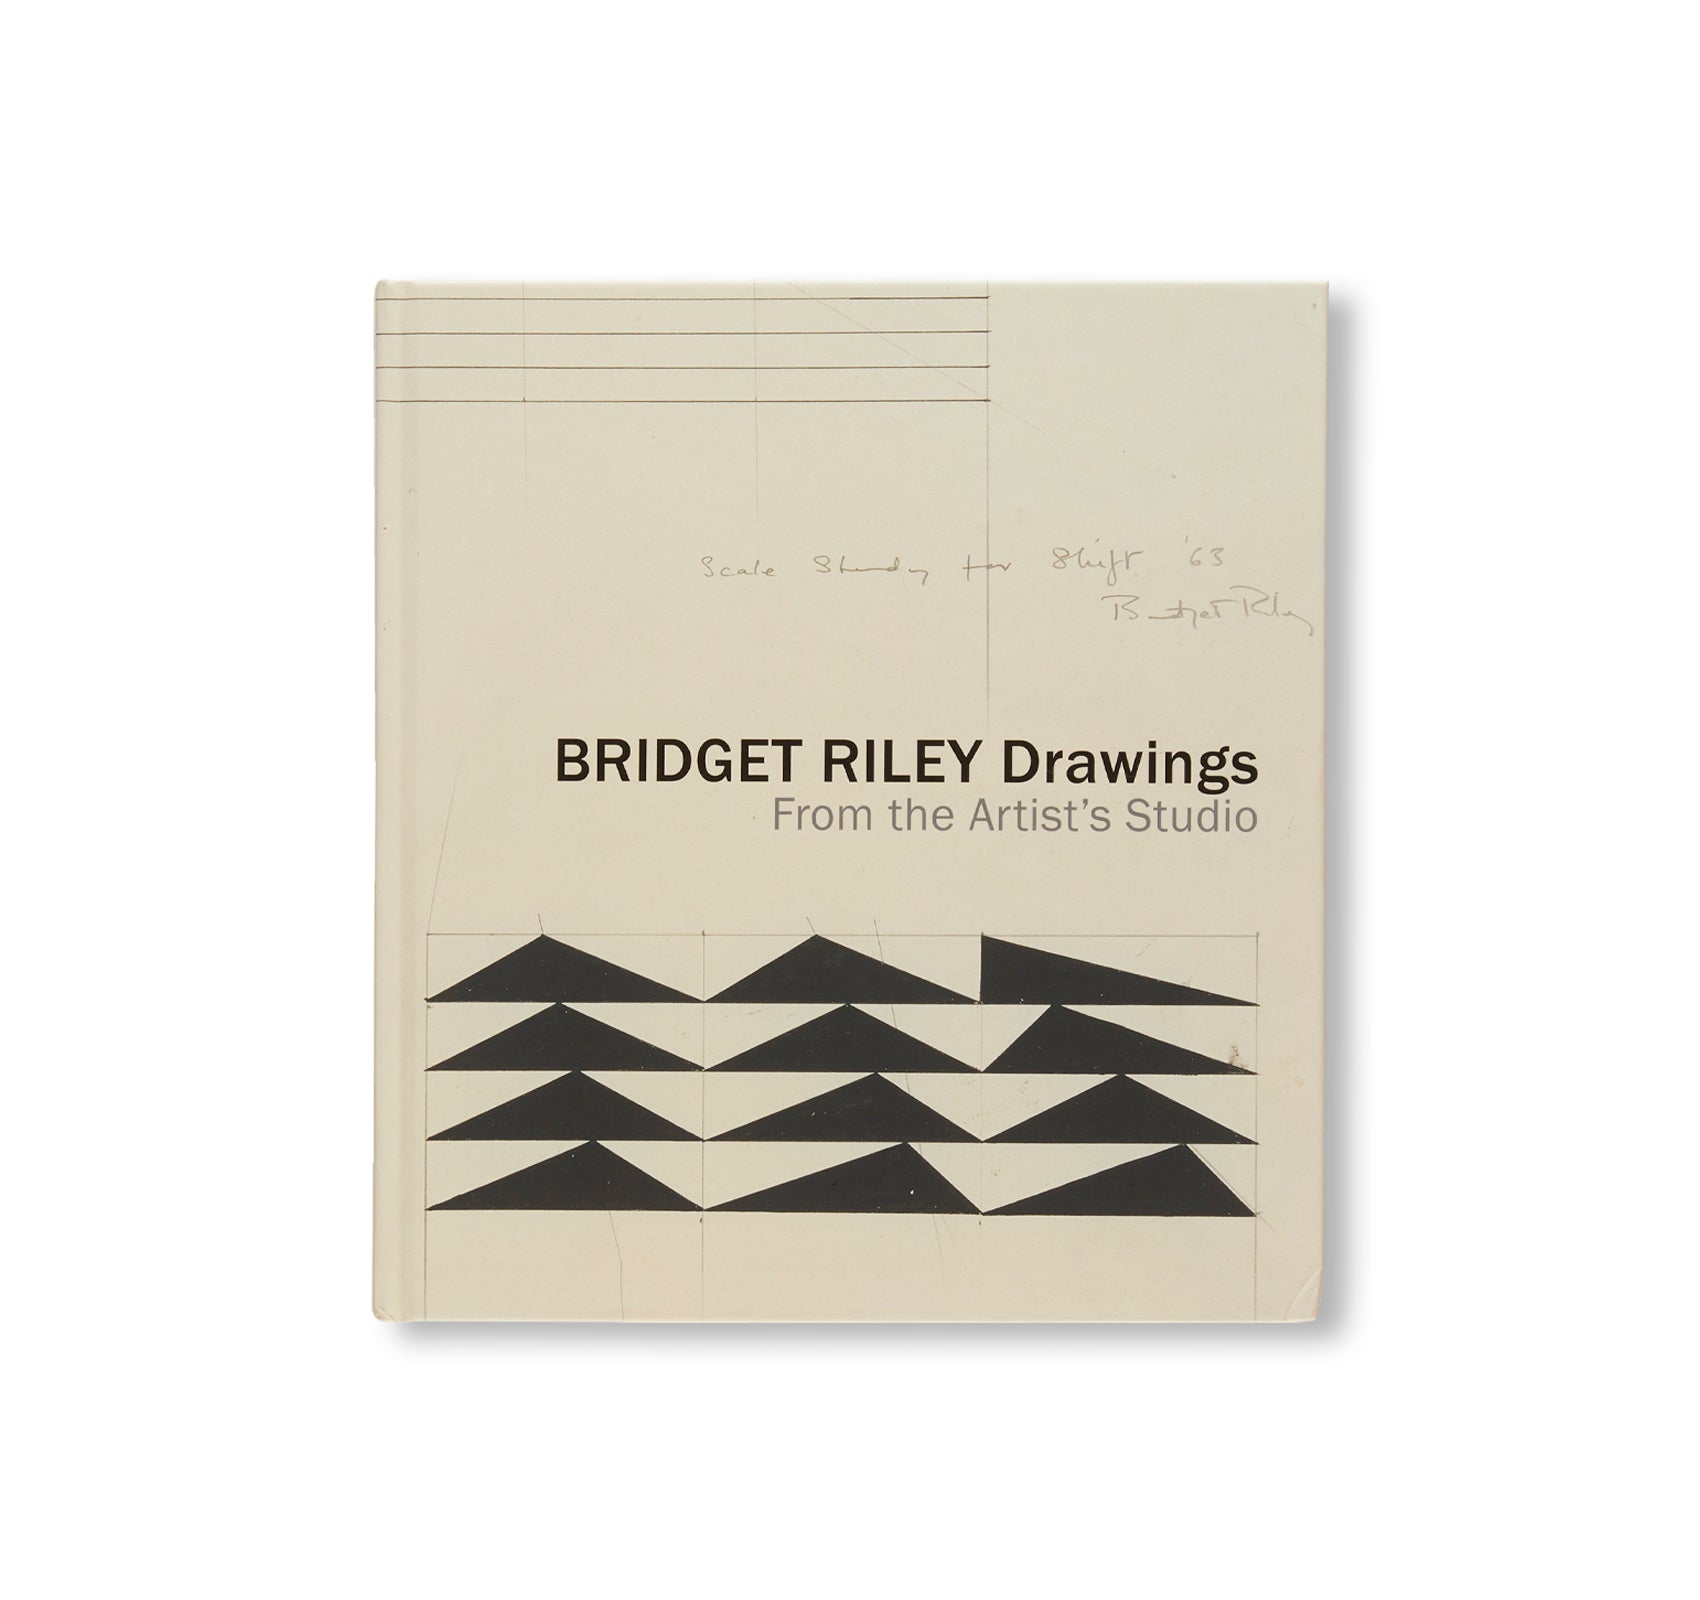 BRIDGET RILEY DRAWINGS by Bridget Riley